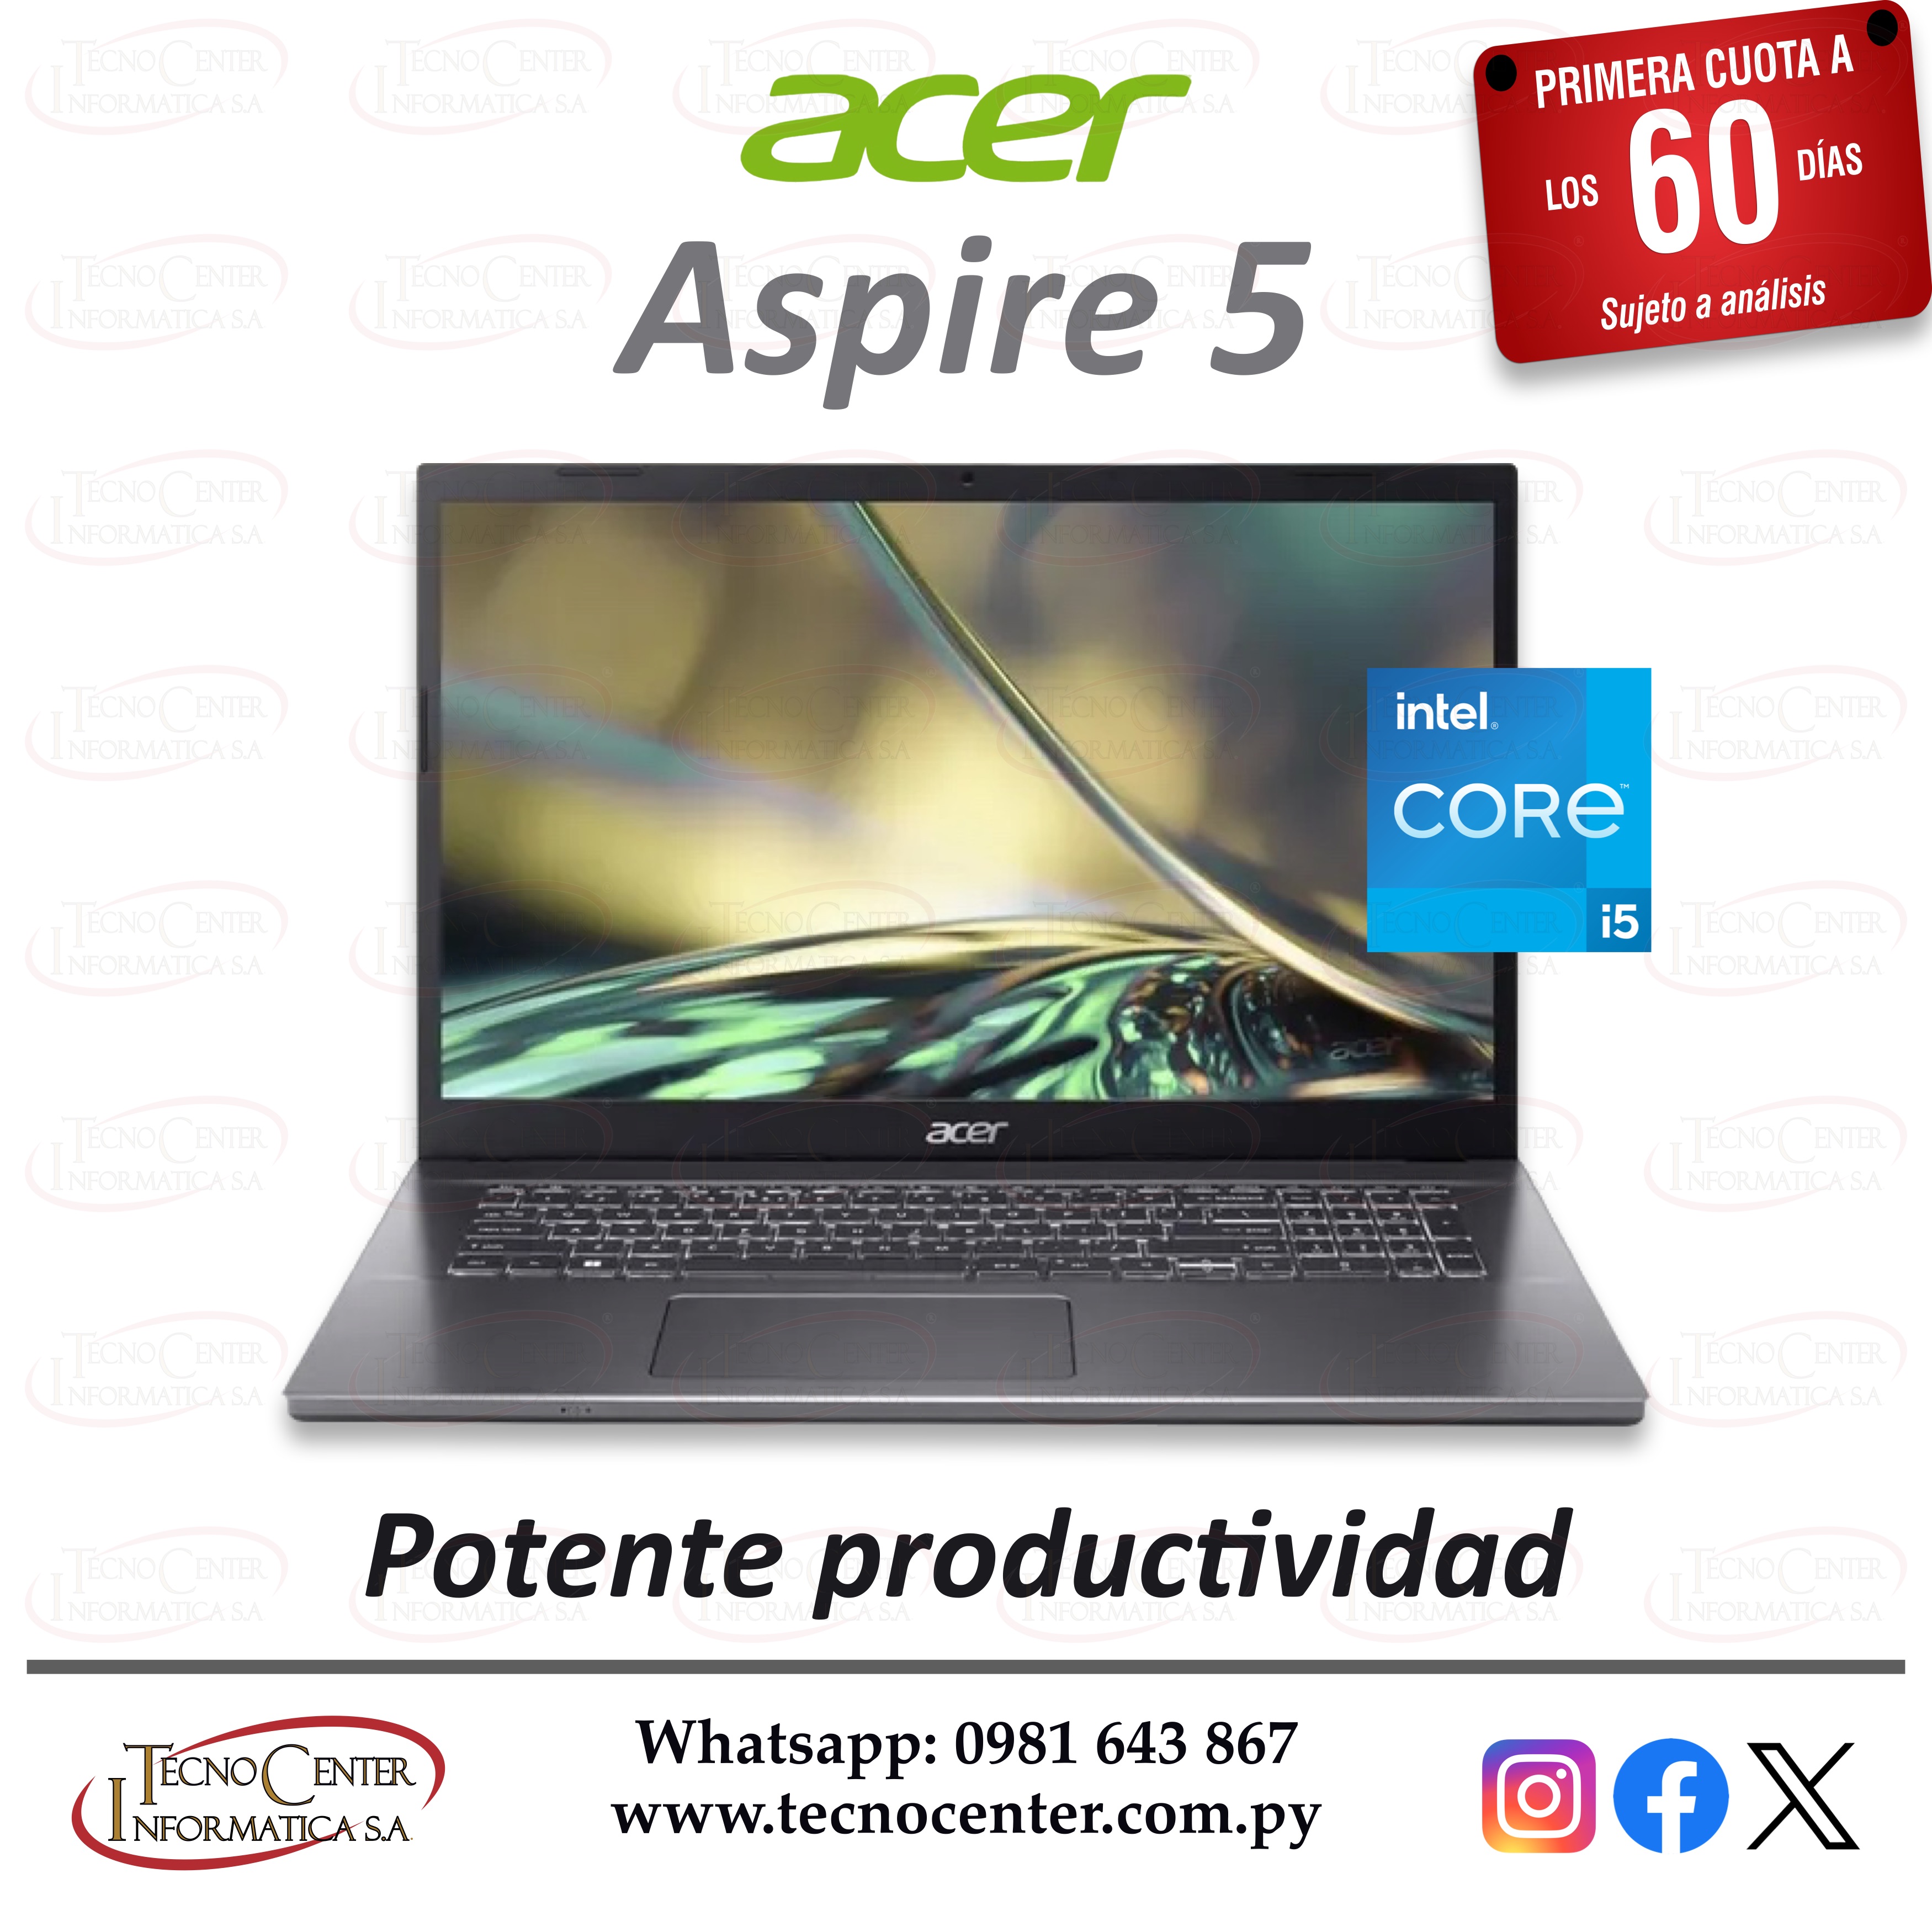 Notebook Acer Aspire 5 Intel Core i5